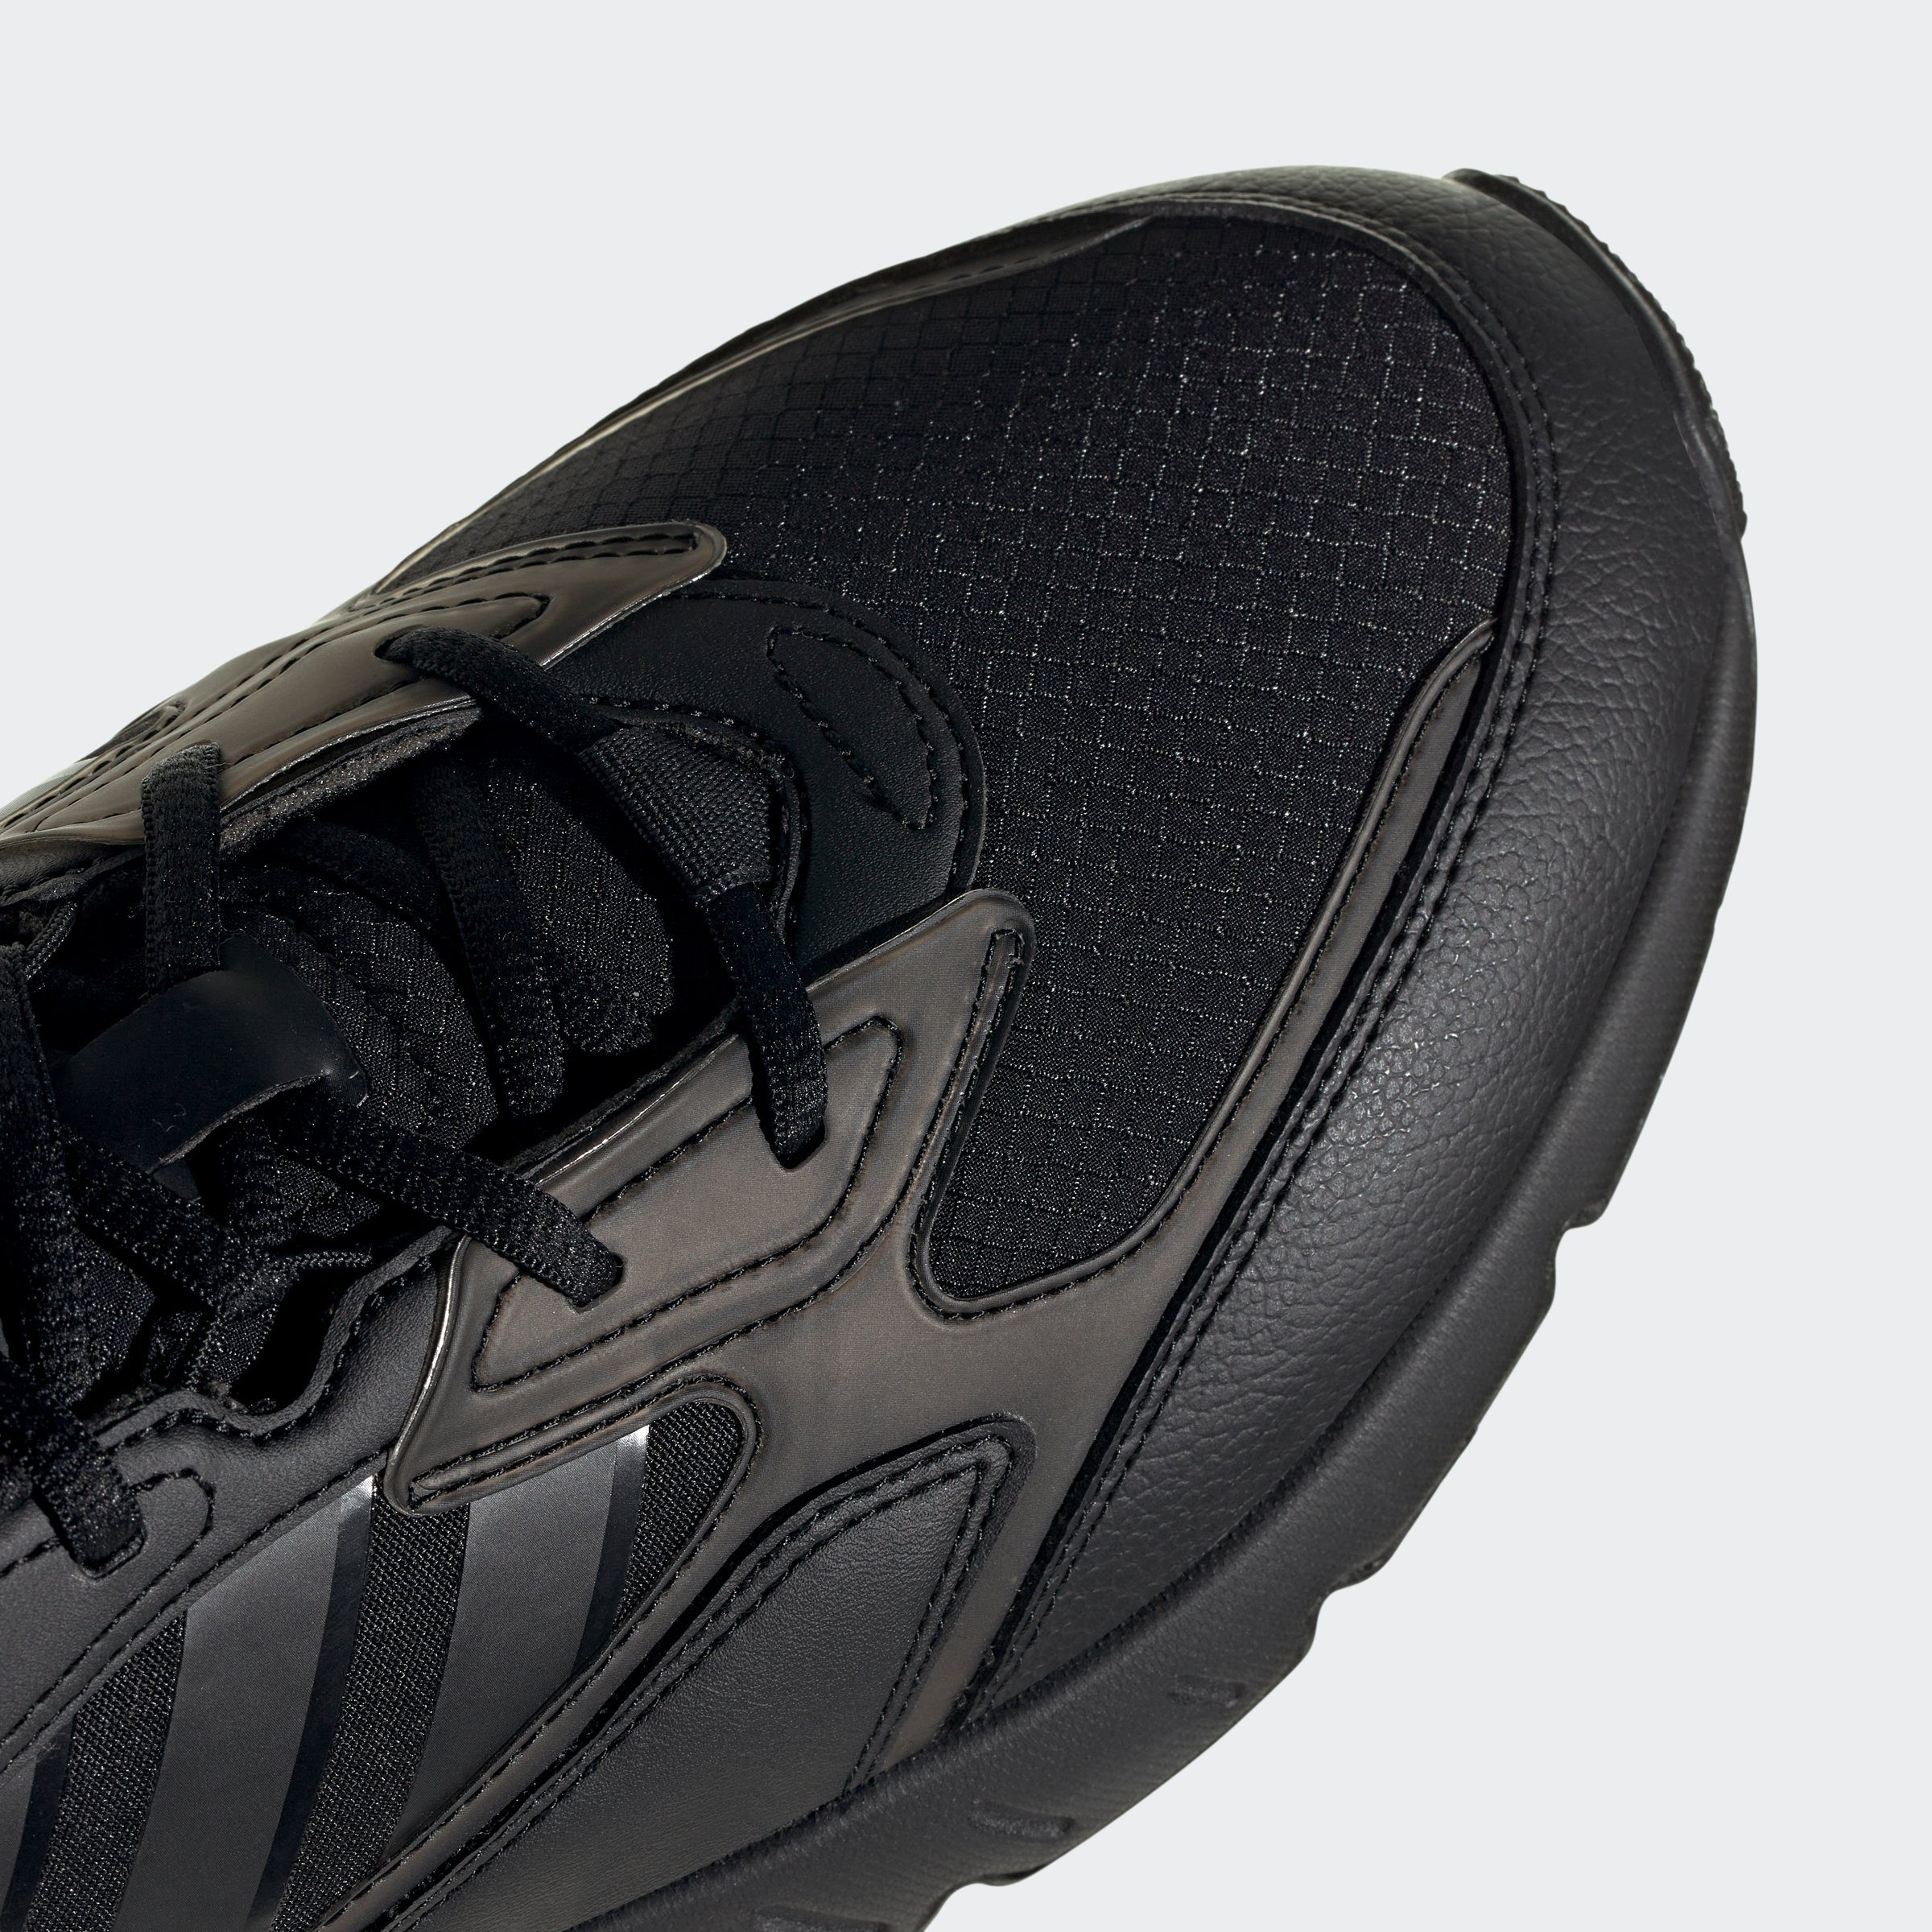 Sneaker 1K Boost adidas ZX Originals Sneaker Originals 2.0 adidas